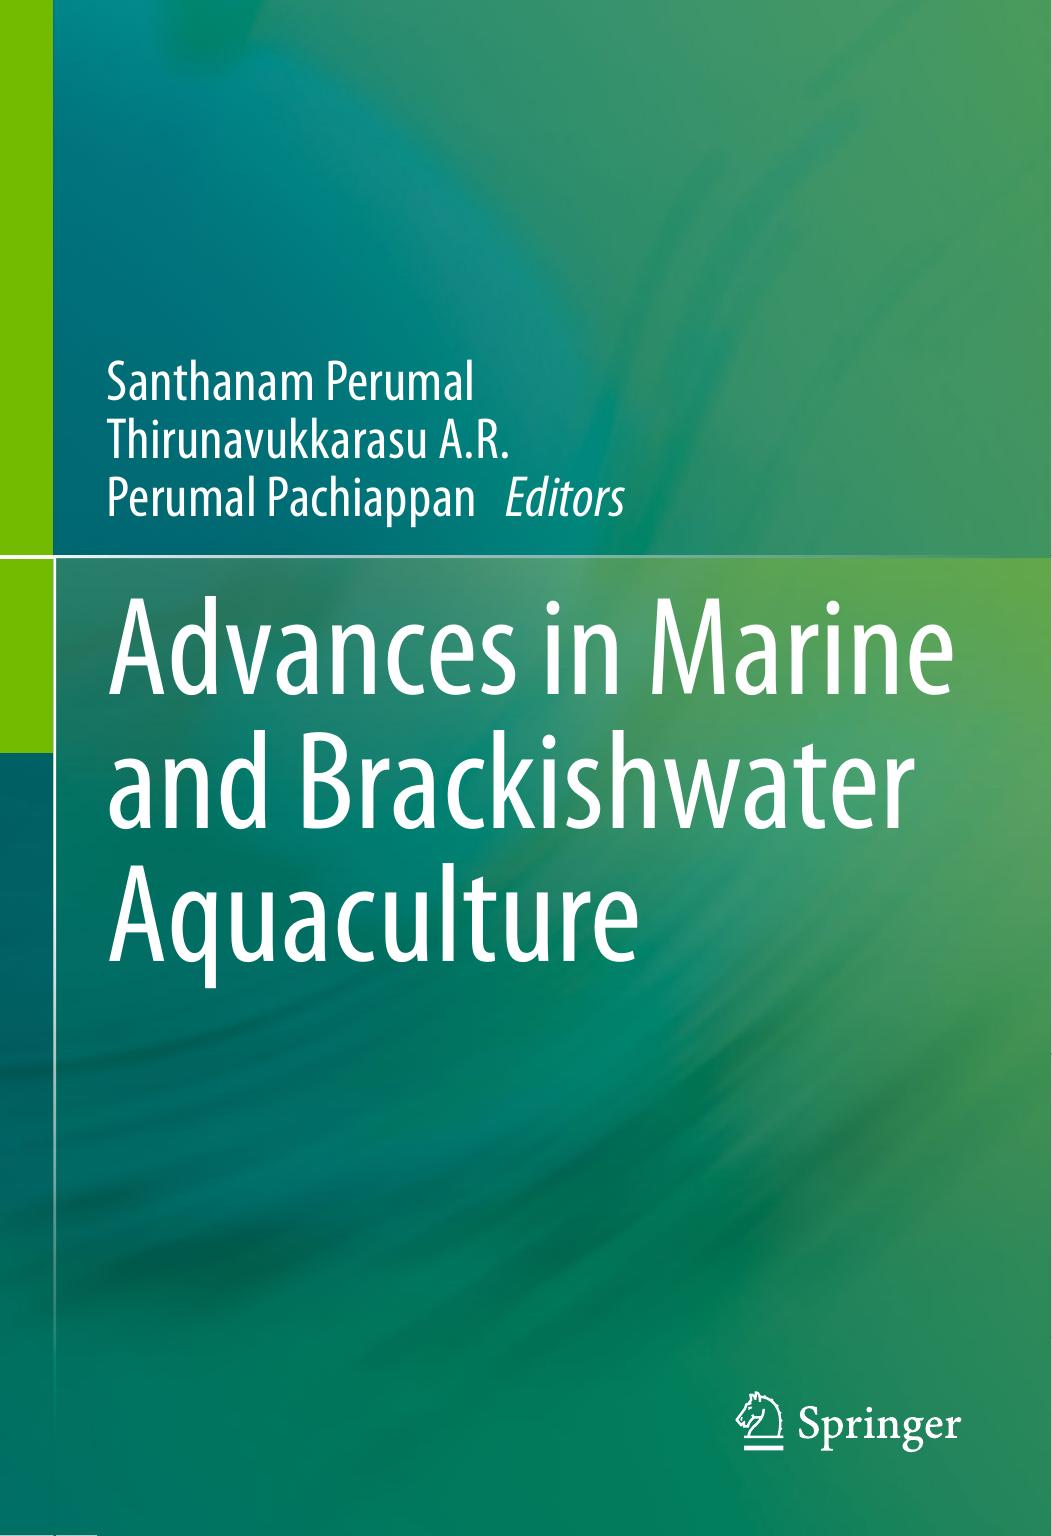 Advances in Marine and Brackishwater Aquaculture-Springer India (2015)